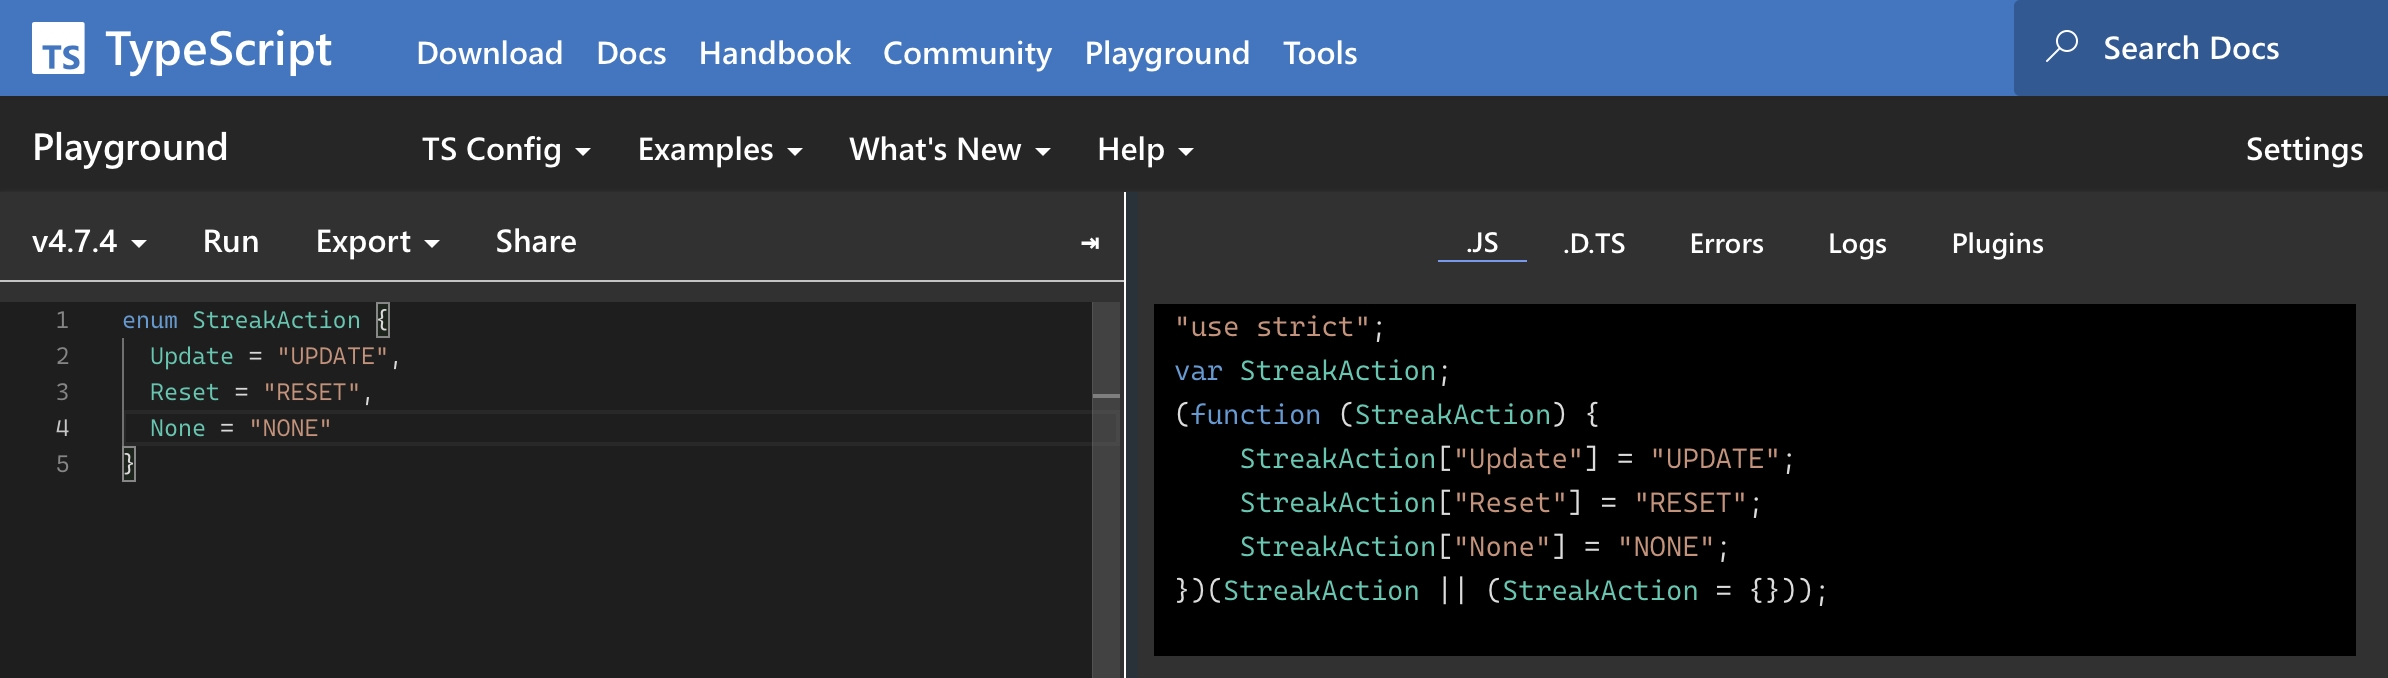 TypeScript Playground 1 - StreackAction